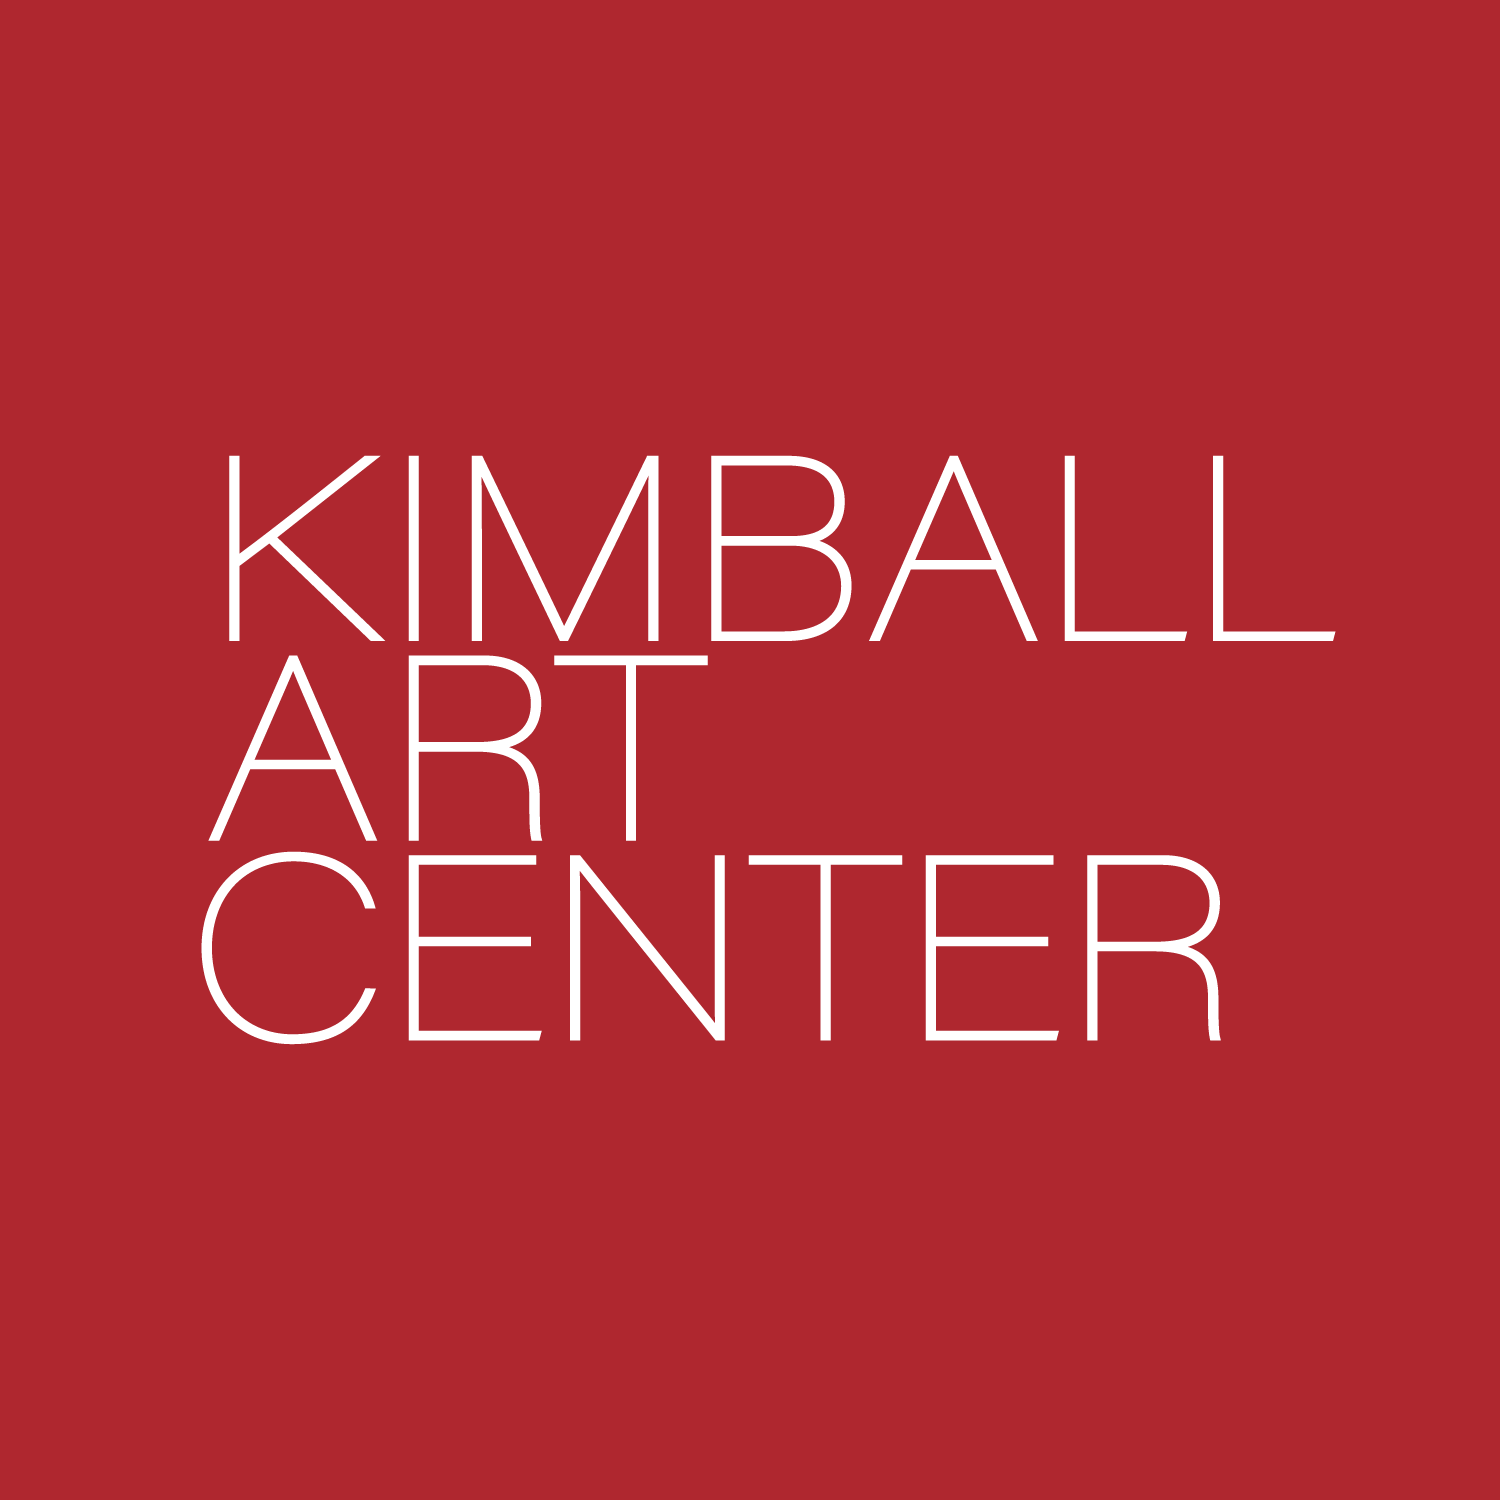 Kimball Art Center